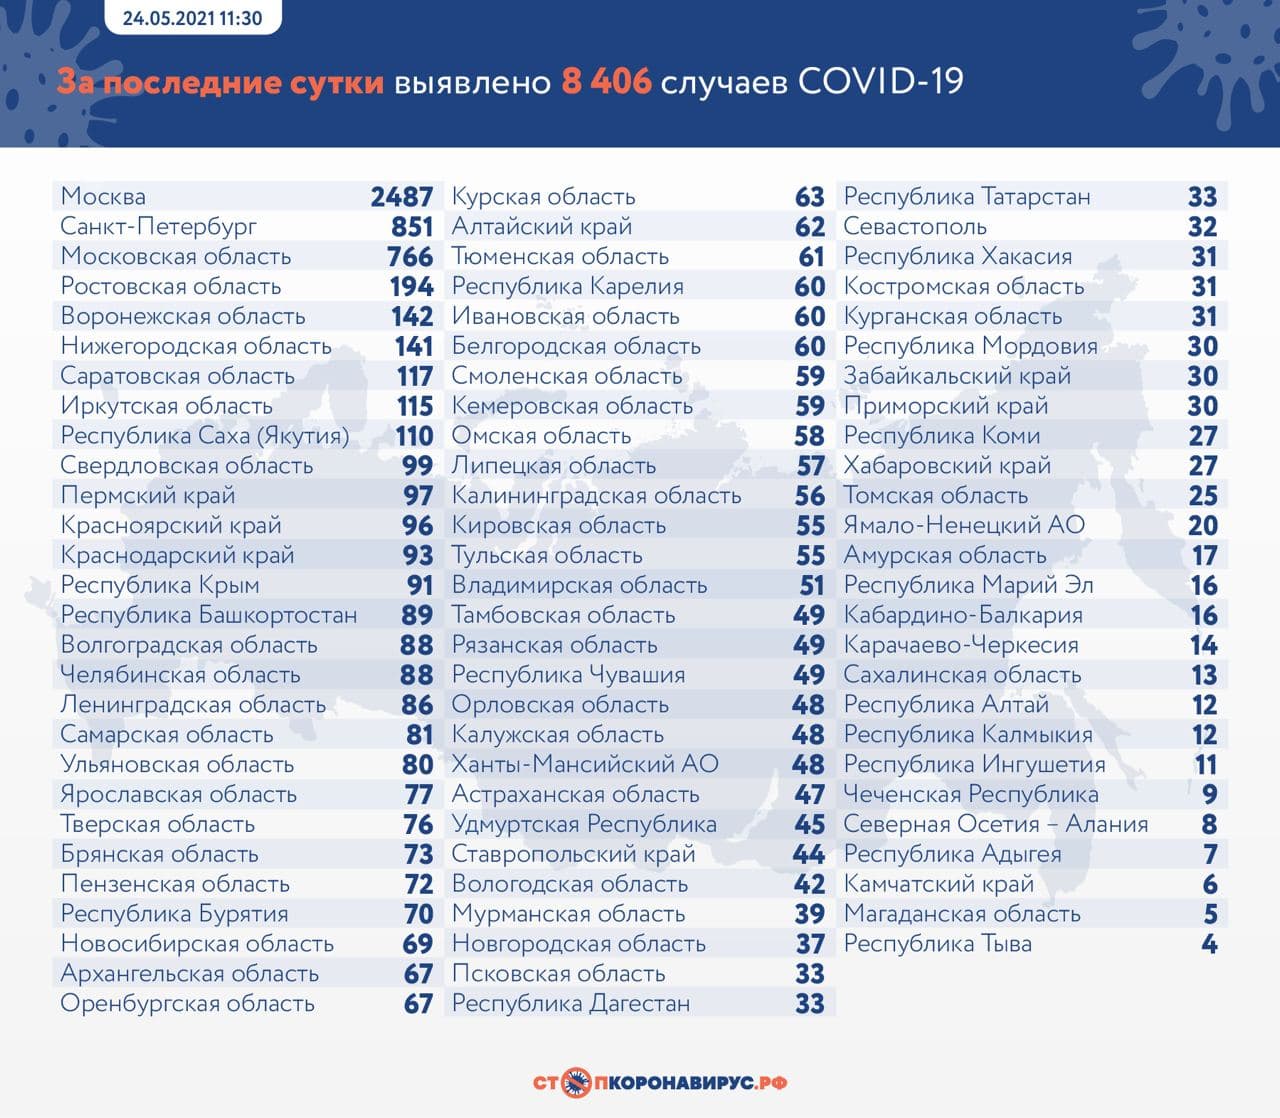 Оперативная статистика по коронавирусу В России на 24 мая